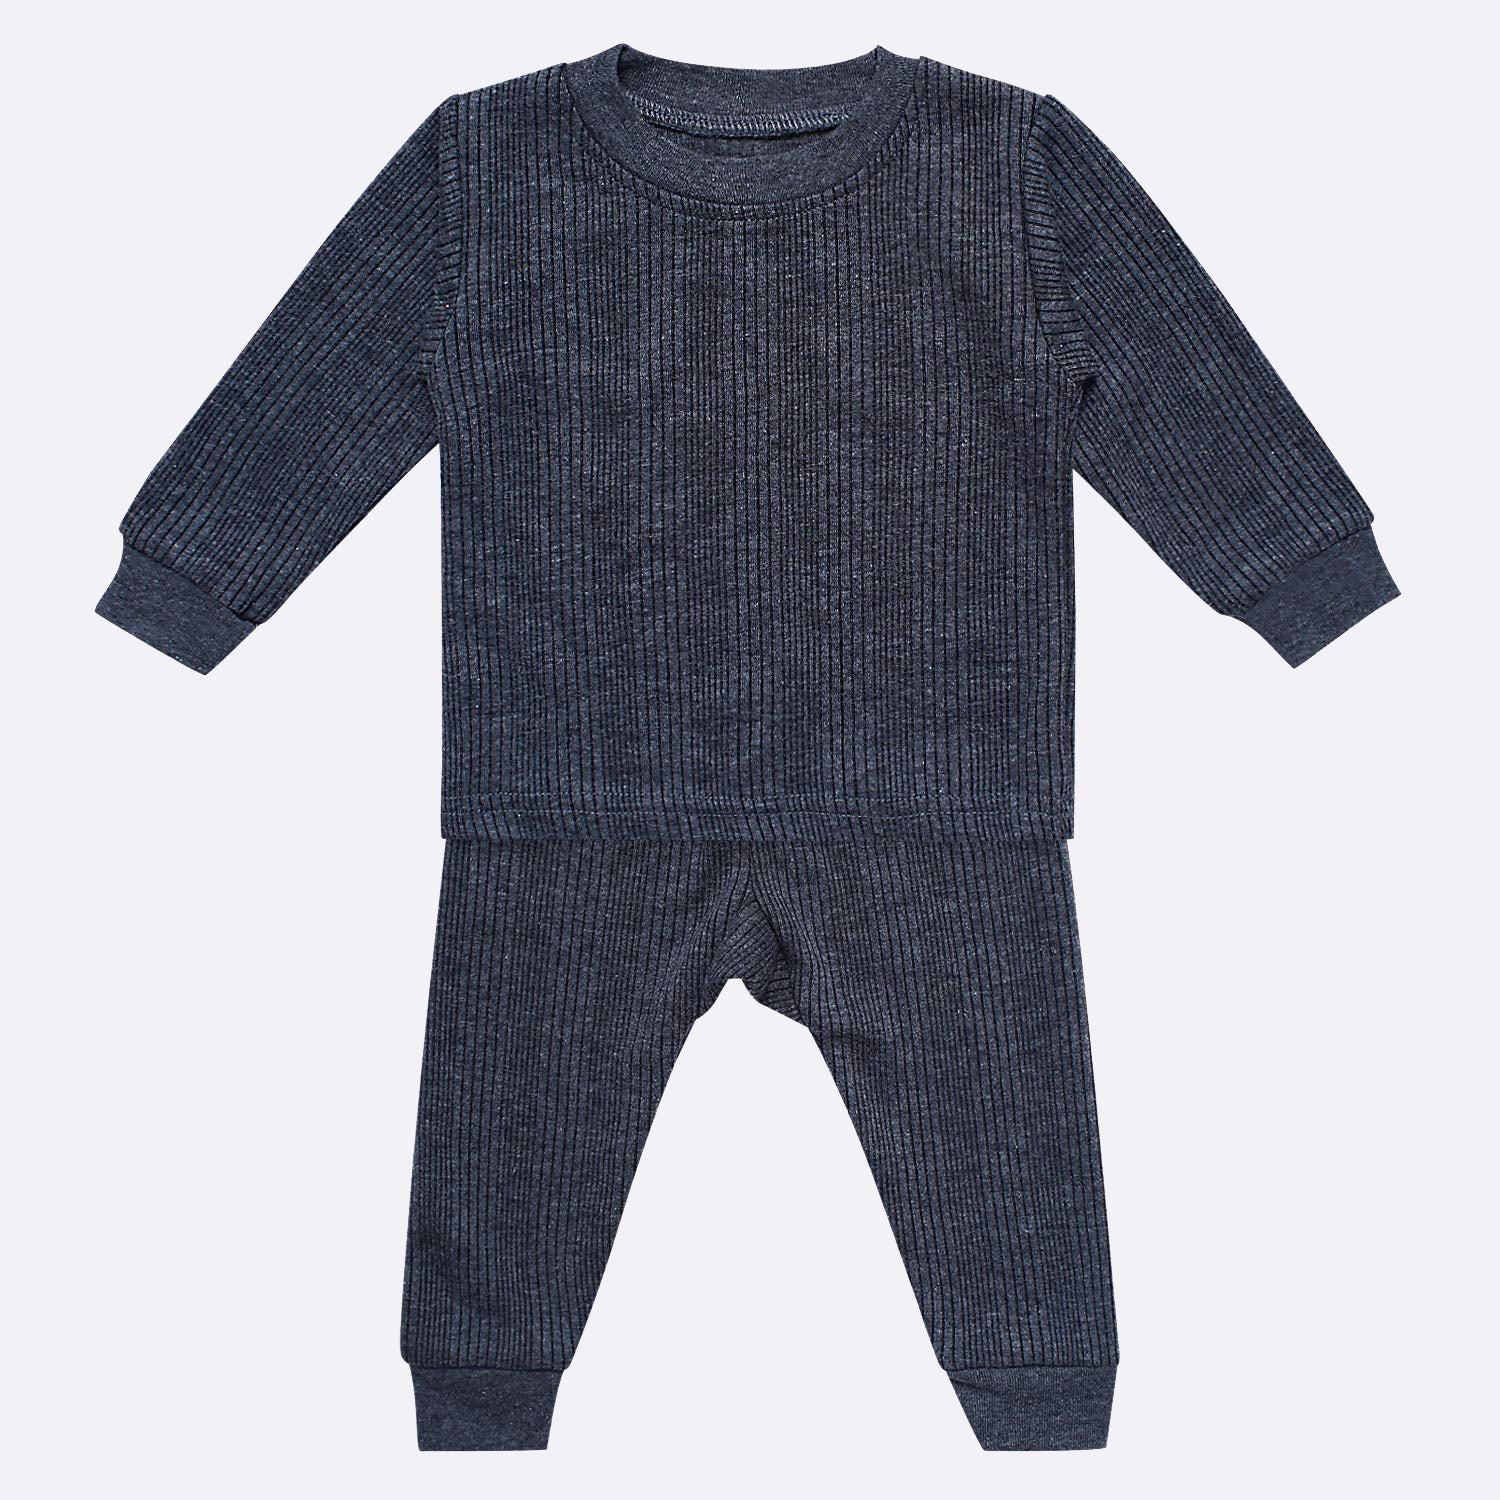 Garmahat - Cozy and Comfy Thermal Top and Pyjama Set (Grey, Pack of 1)